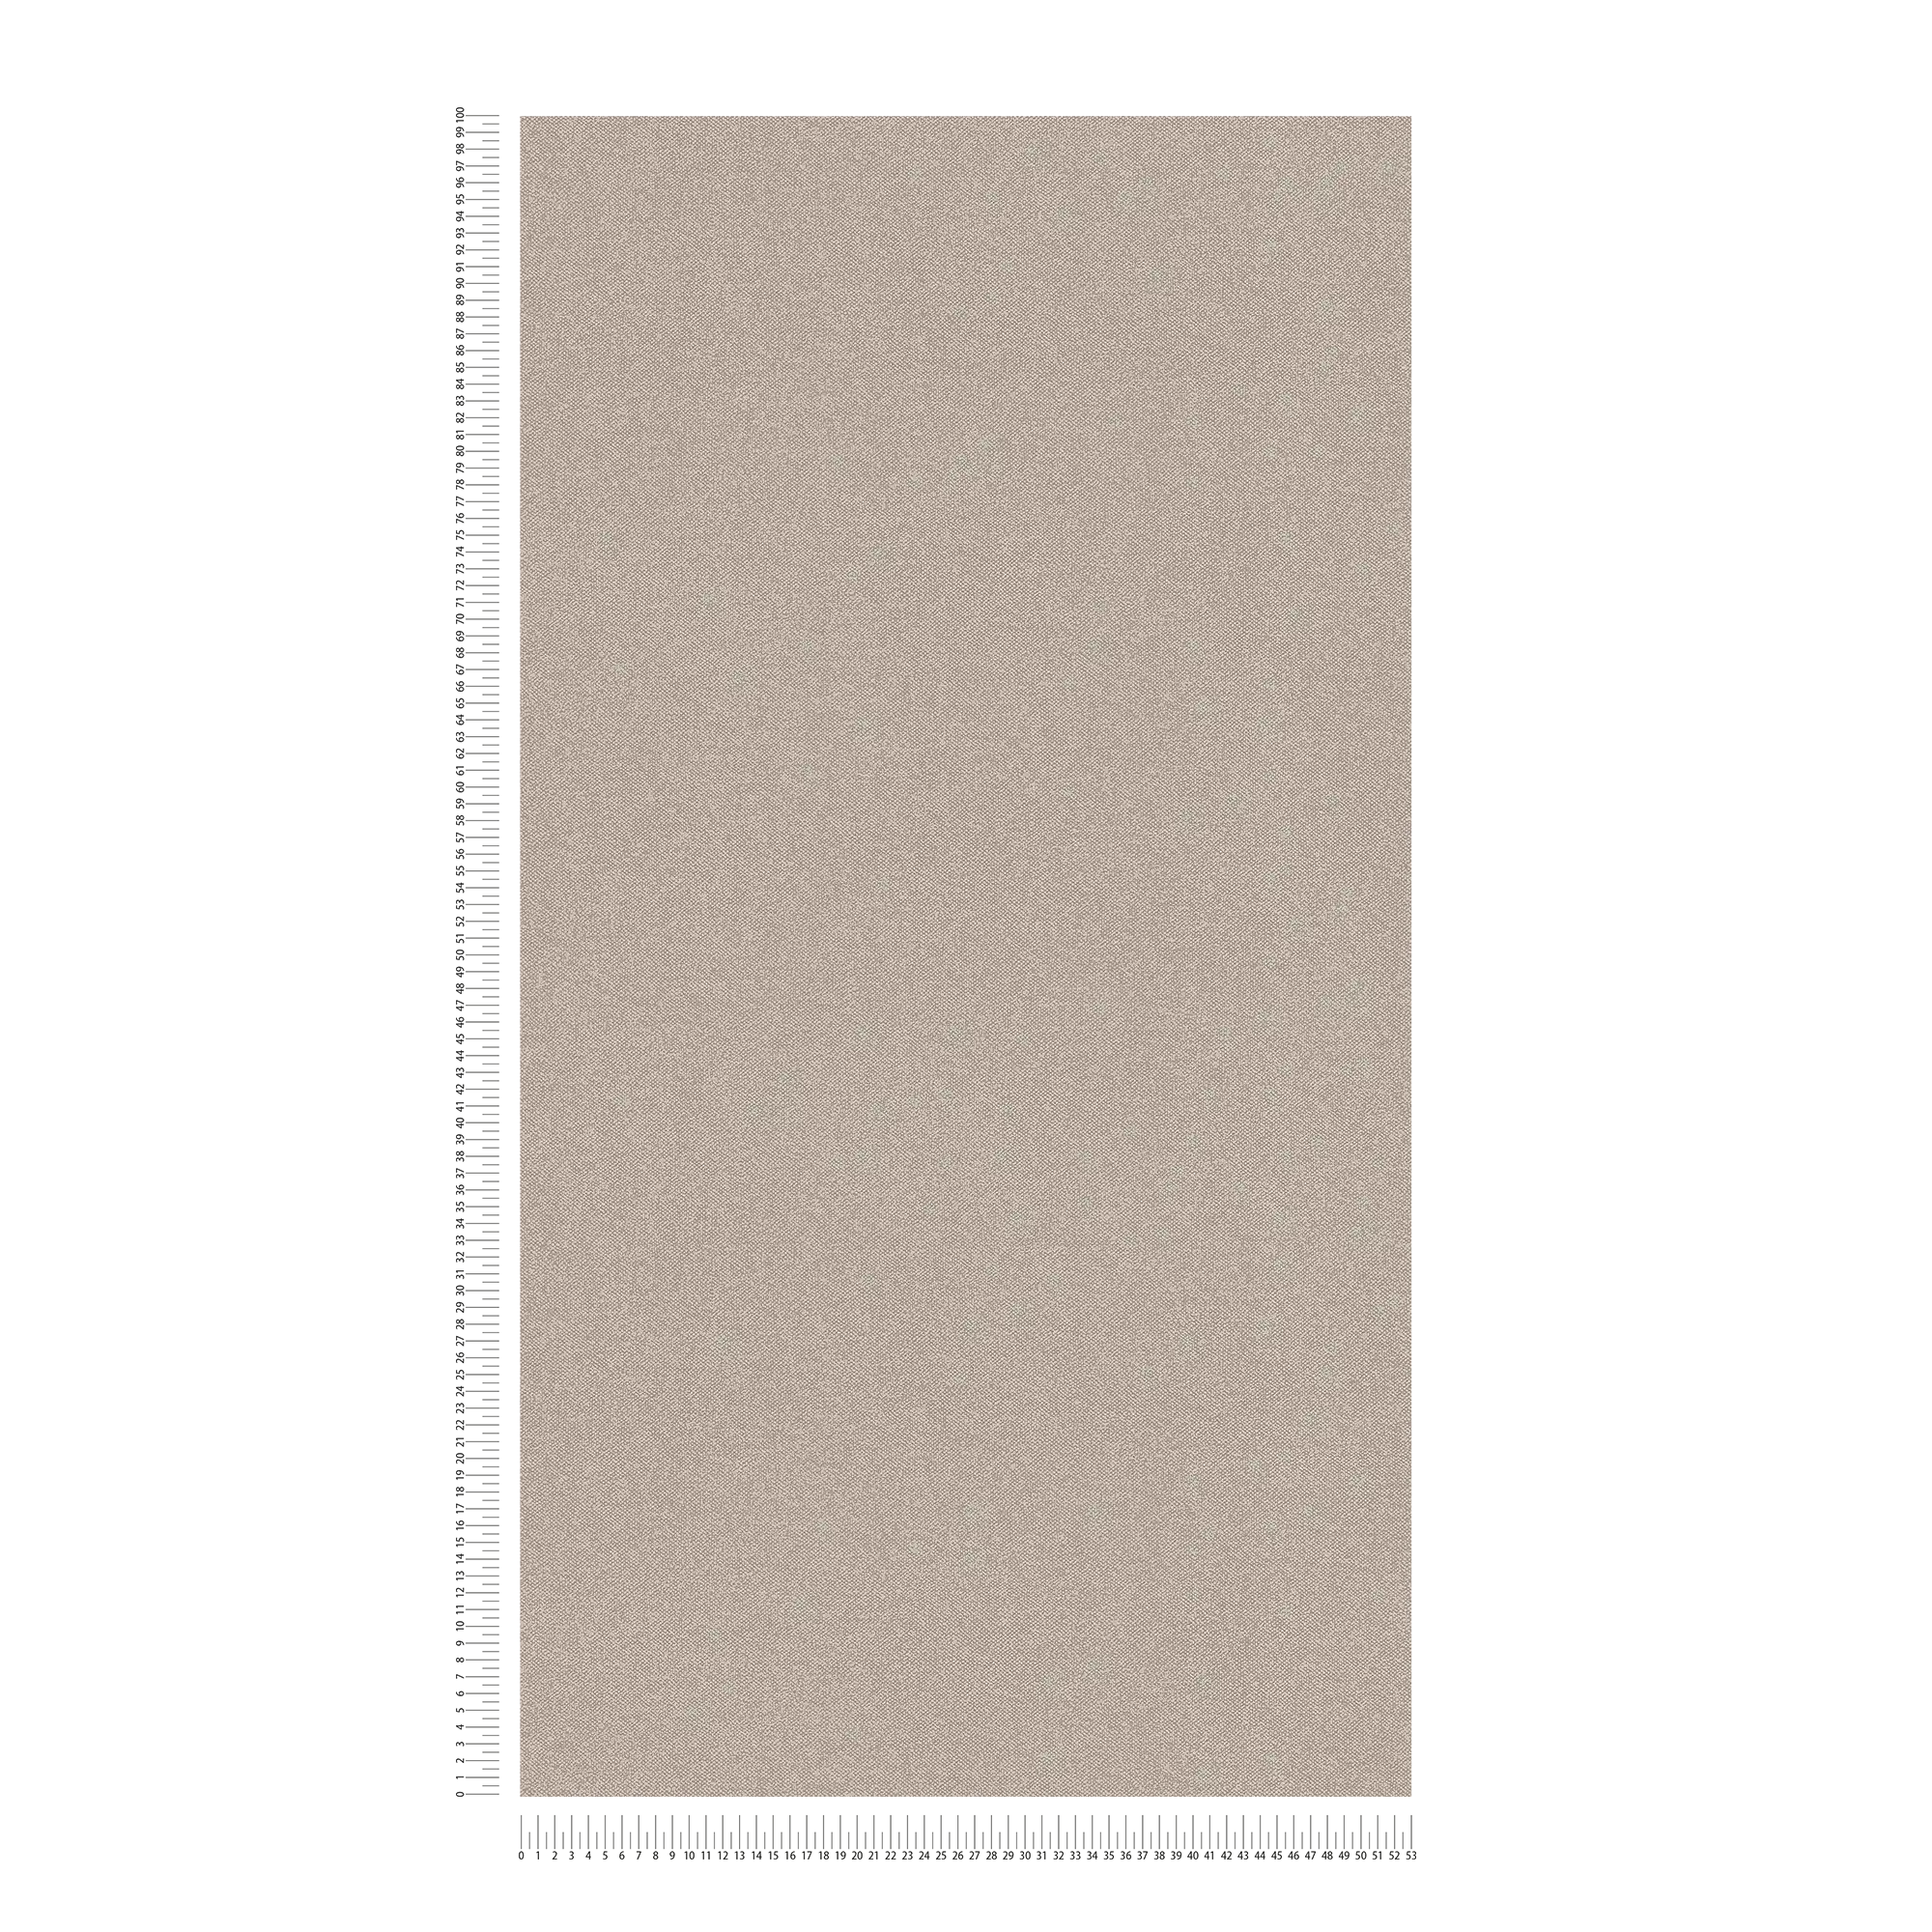             Plain textured wallpaper with linen look - brown
        